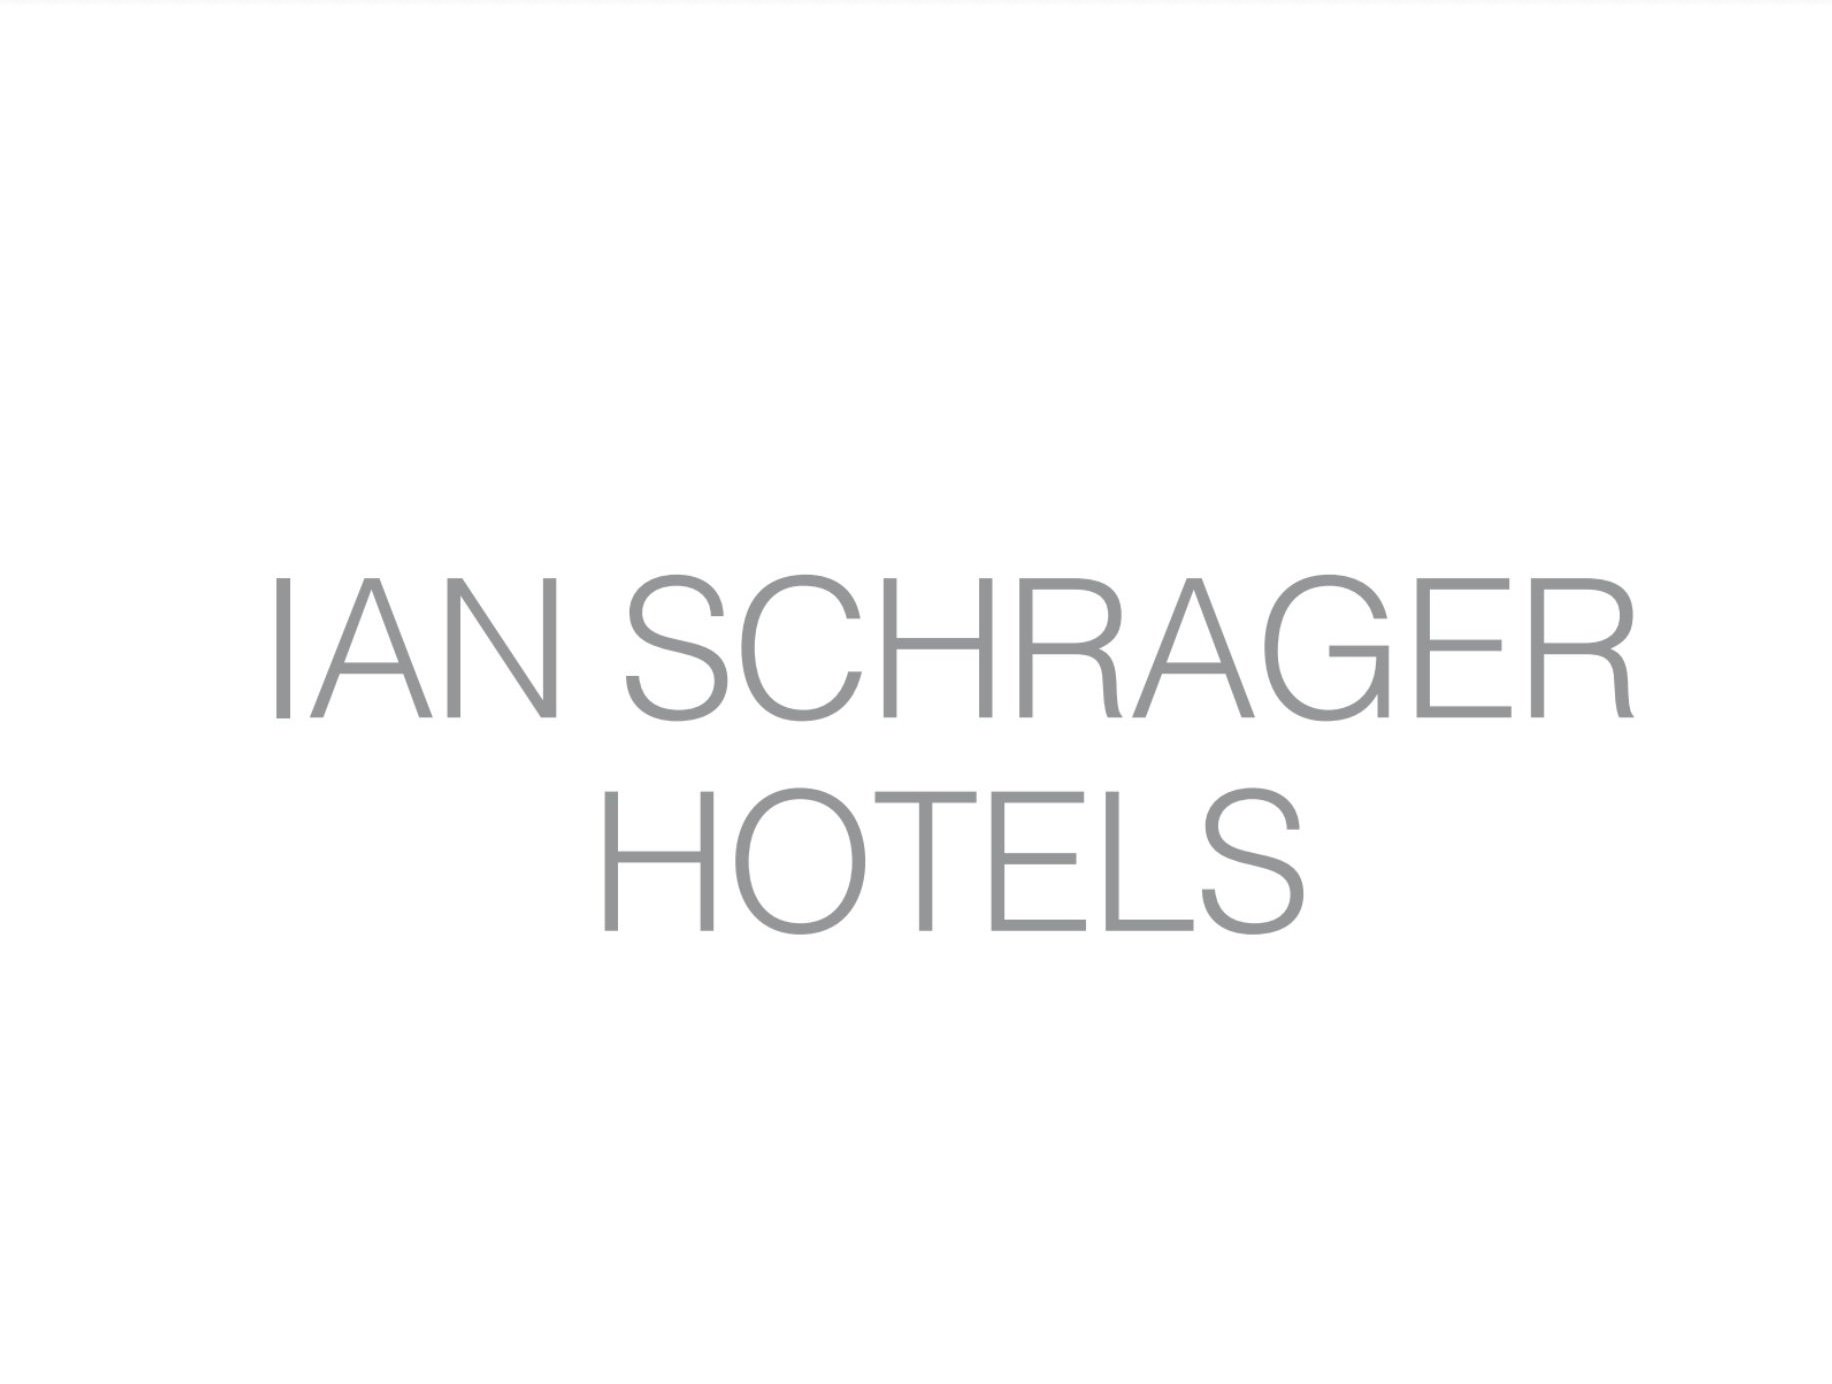 Ian Schrager Hotels